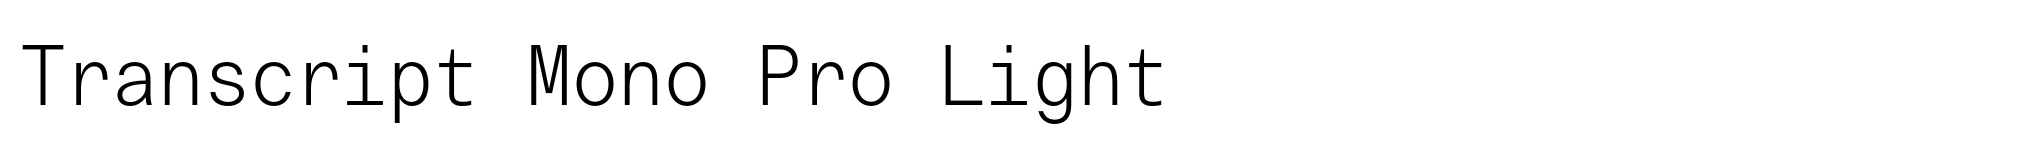 Transcript Mono Pro Light image